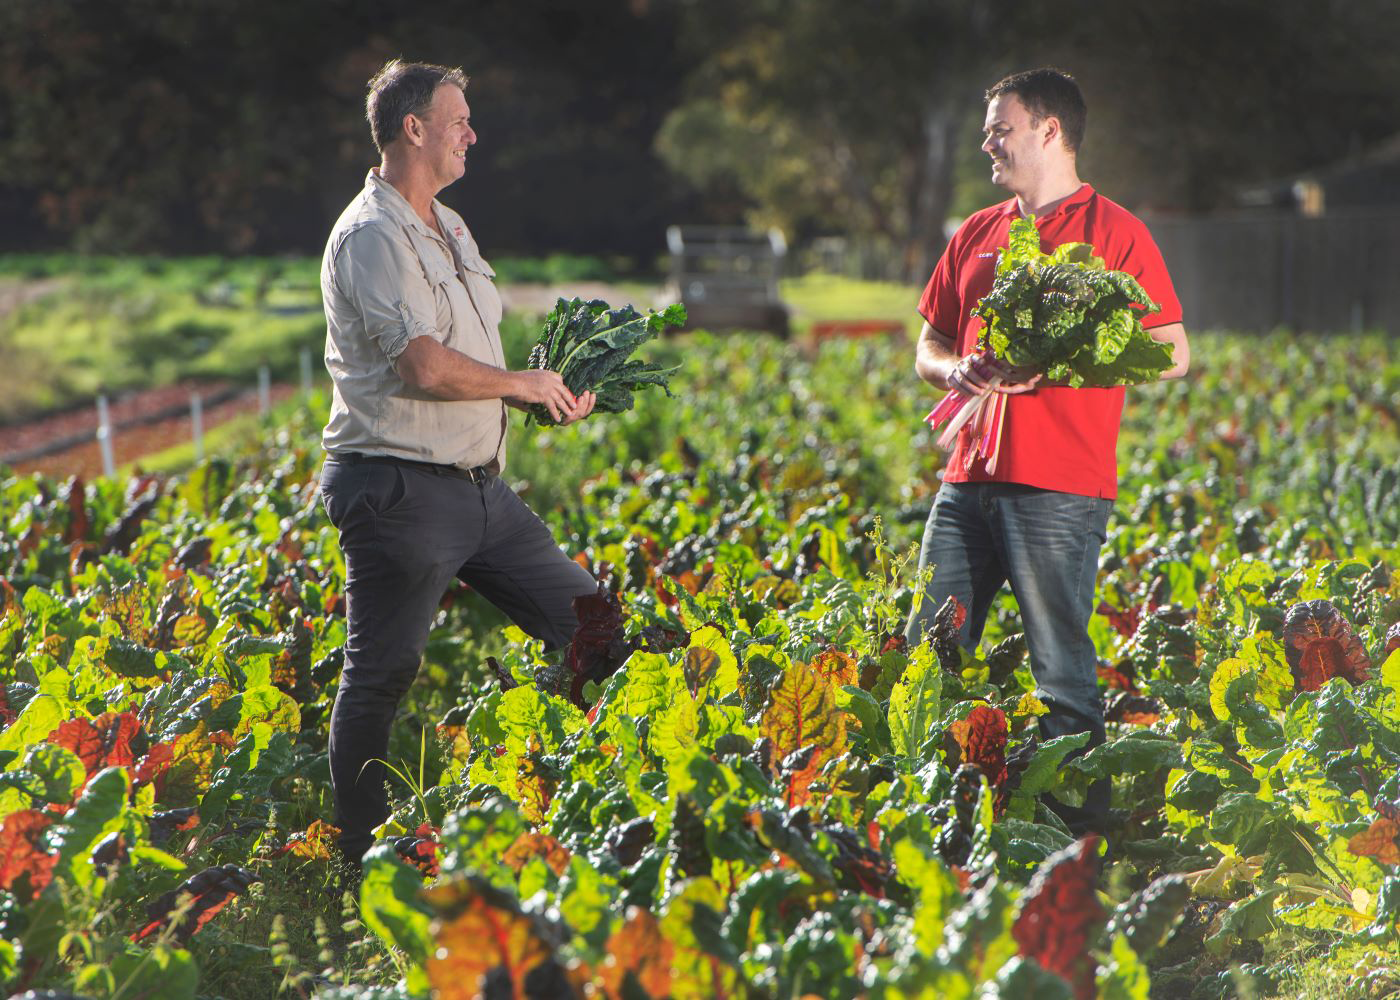 Coles supports organic veg growers to help meet increasing customer demand